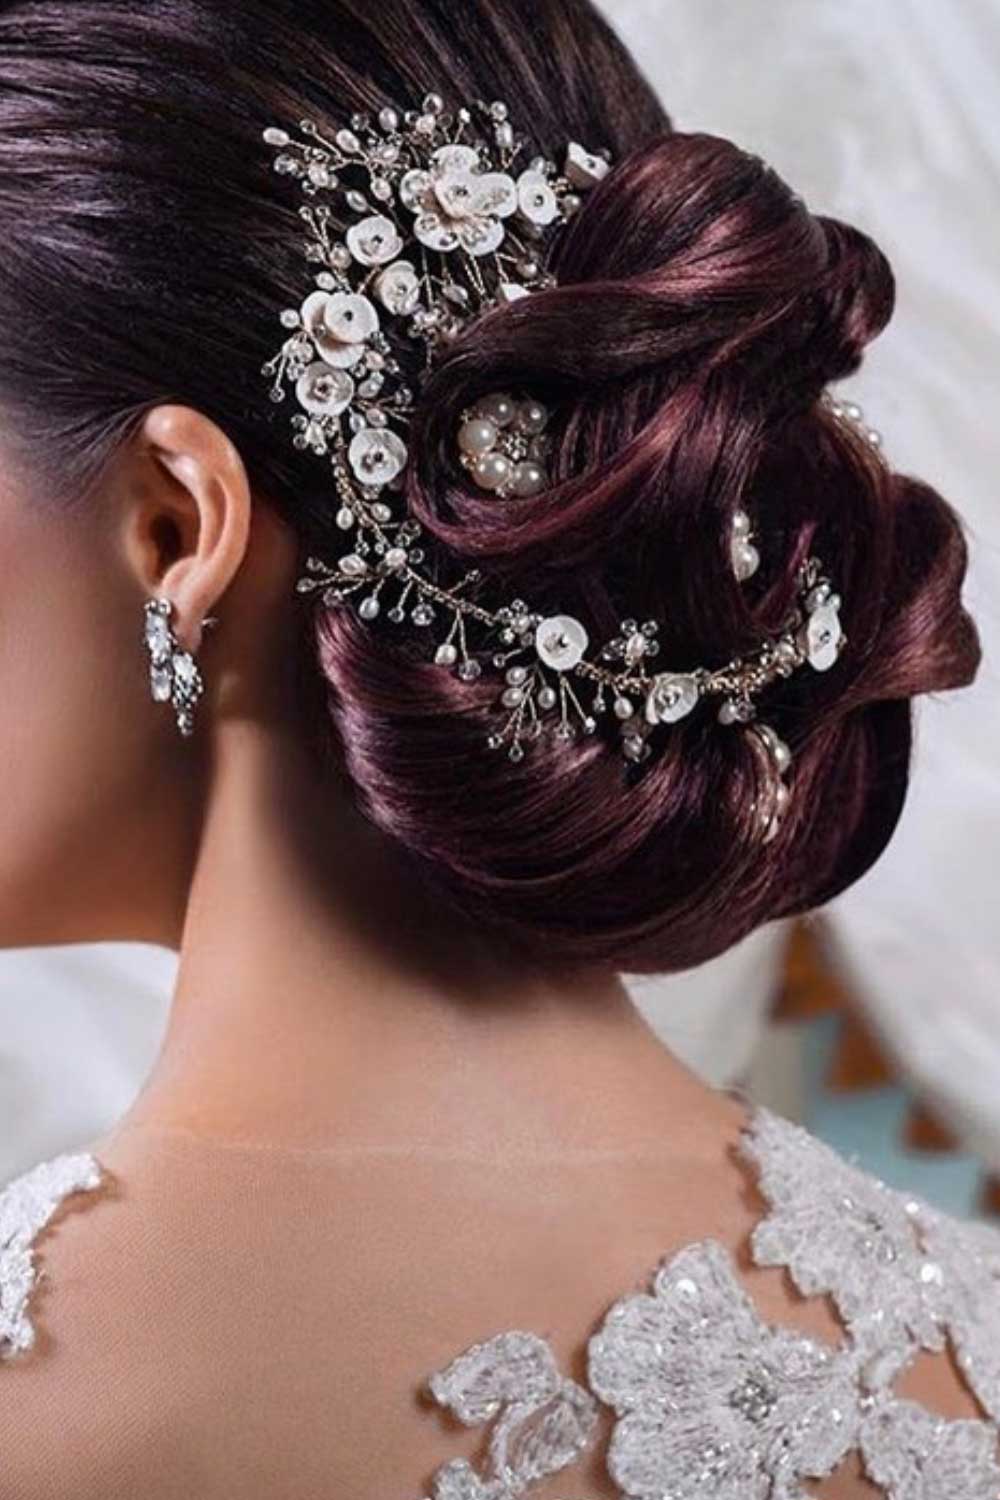 The bridal store salon displaying a woman's wedding hair.